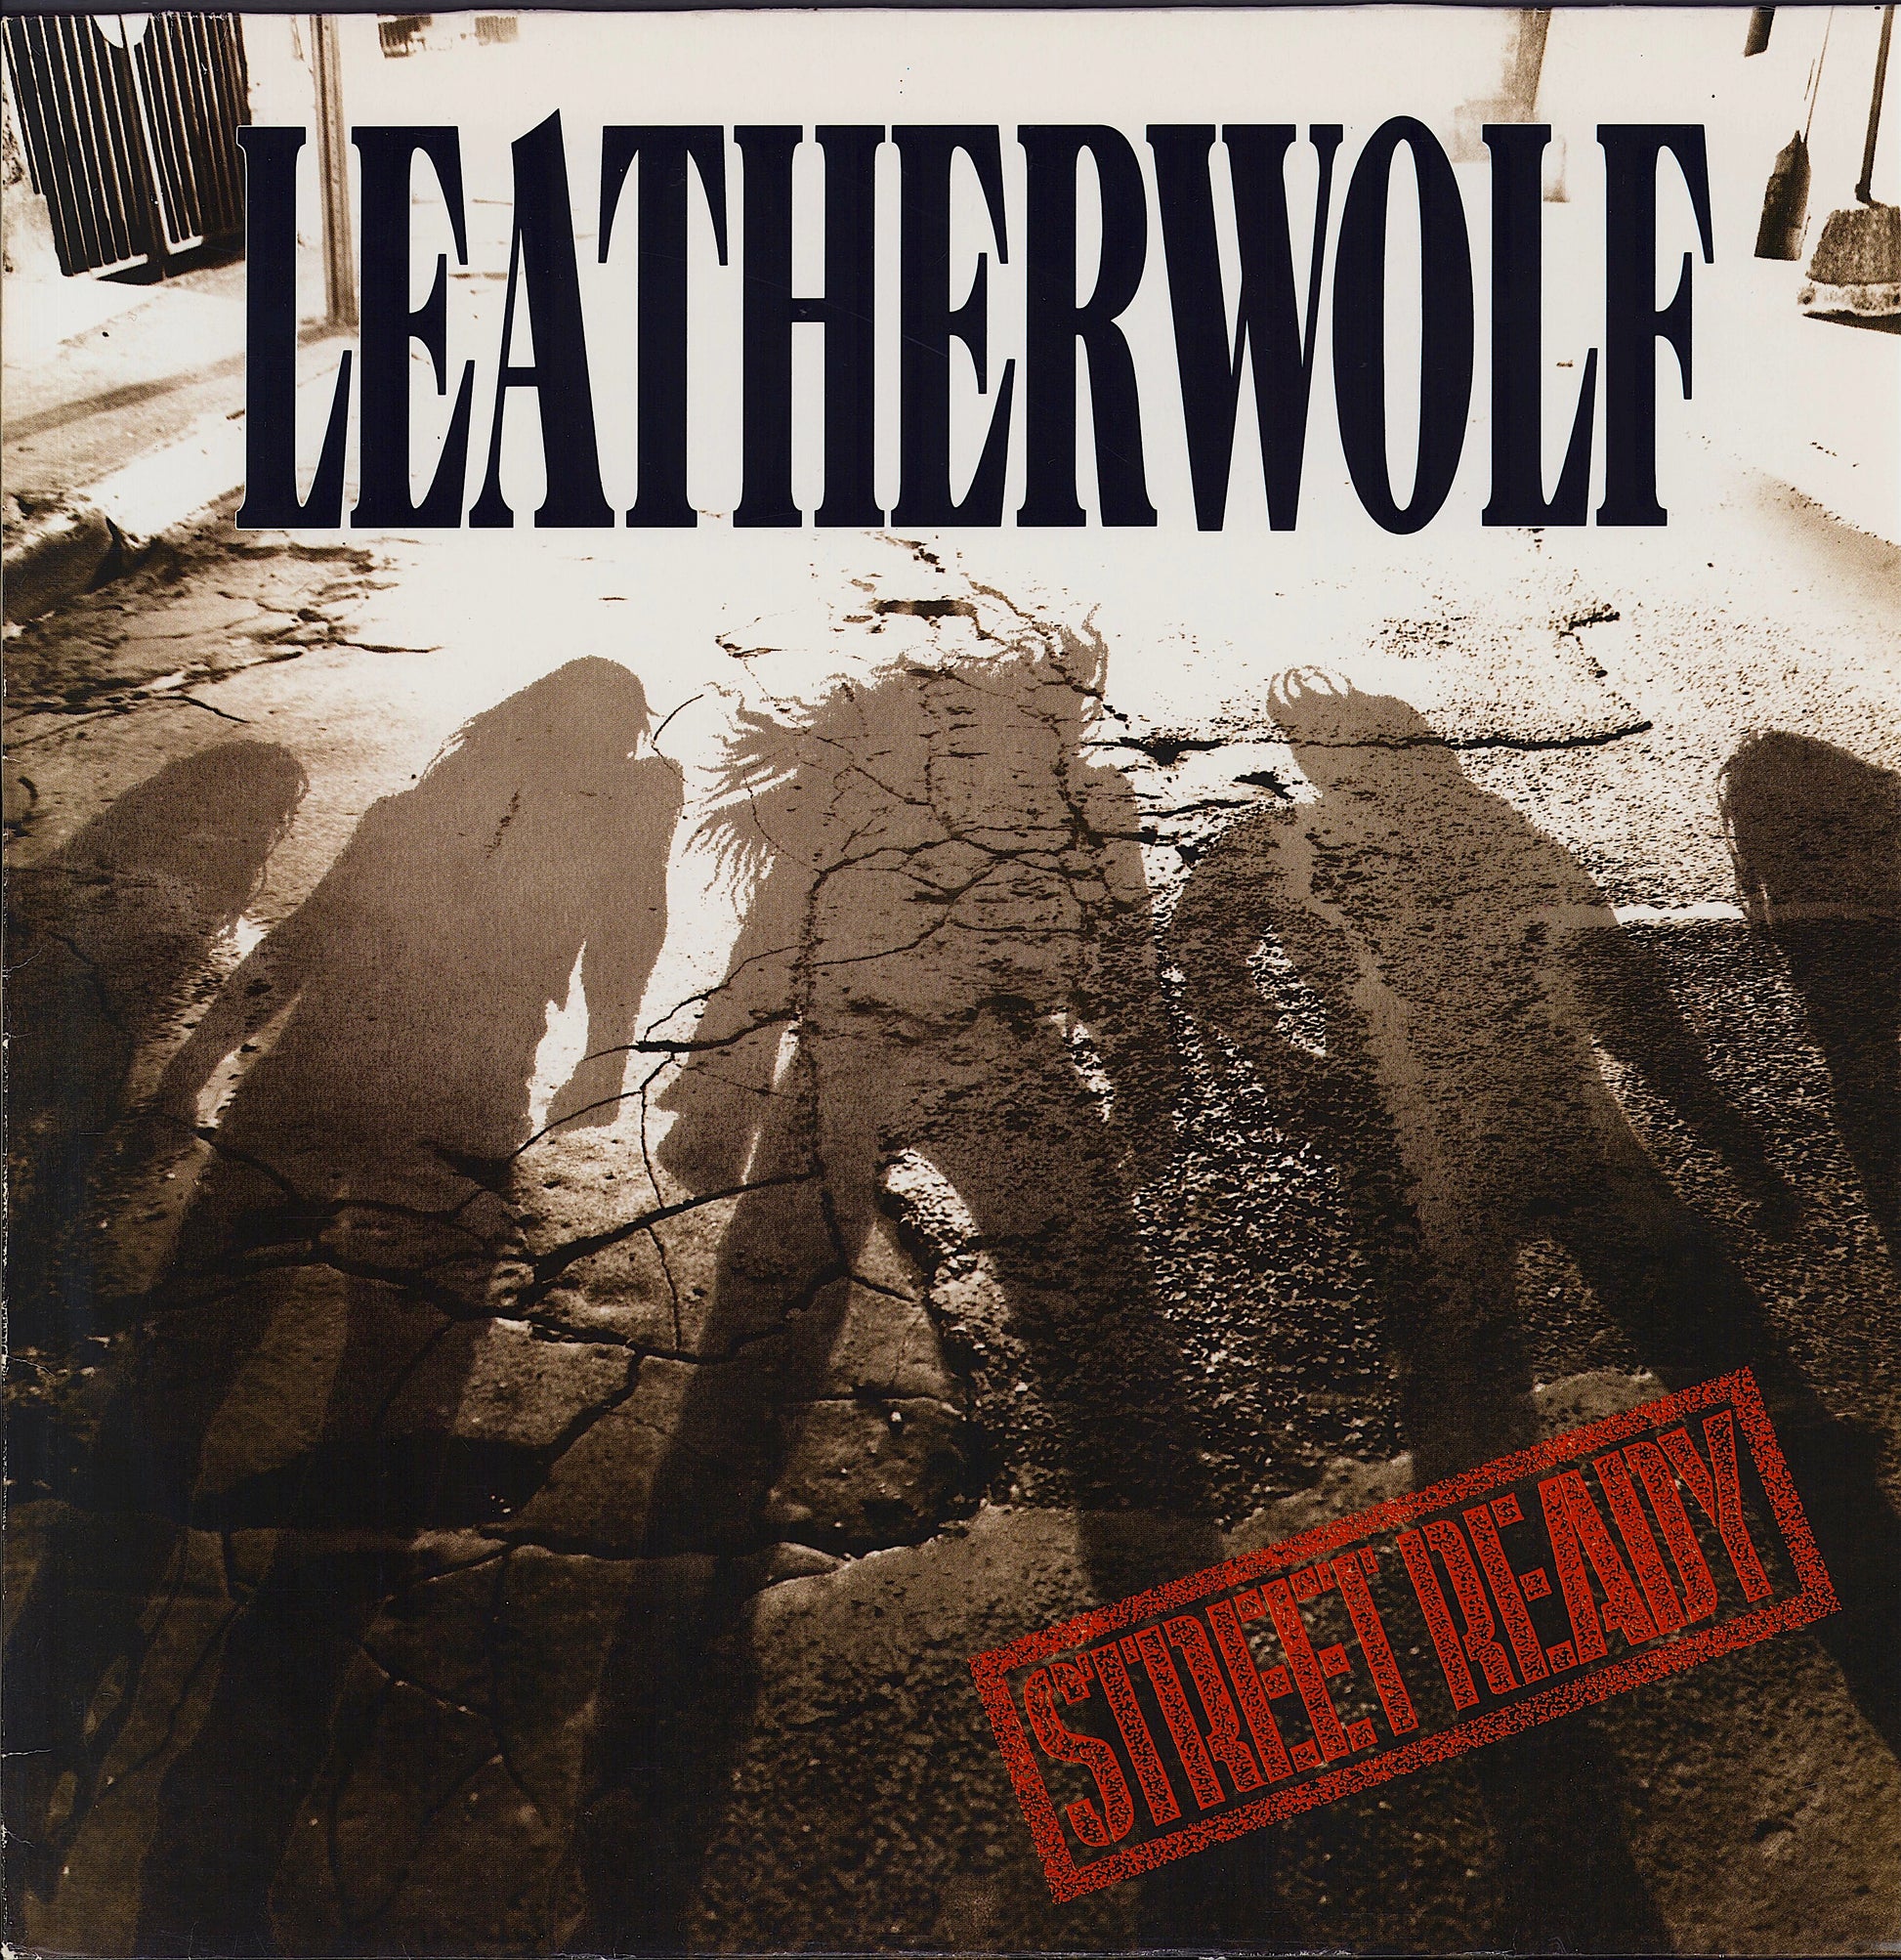 Leatherwolf ‎- Street Ready (Vinyl LP)